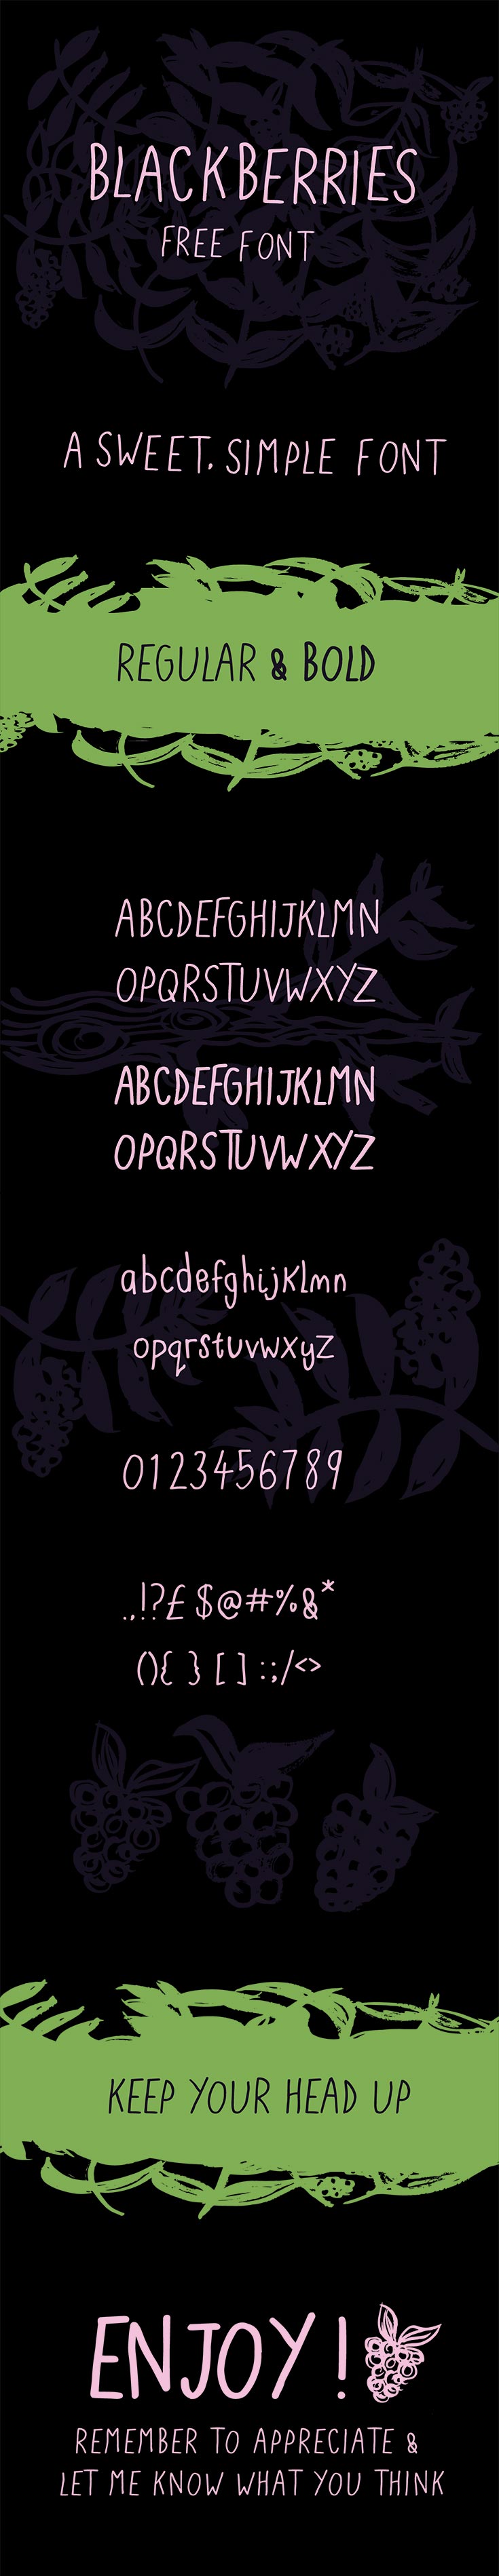 Free Blackberries Handwritten Font Typeface